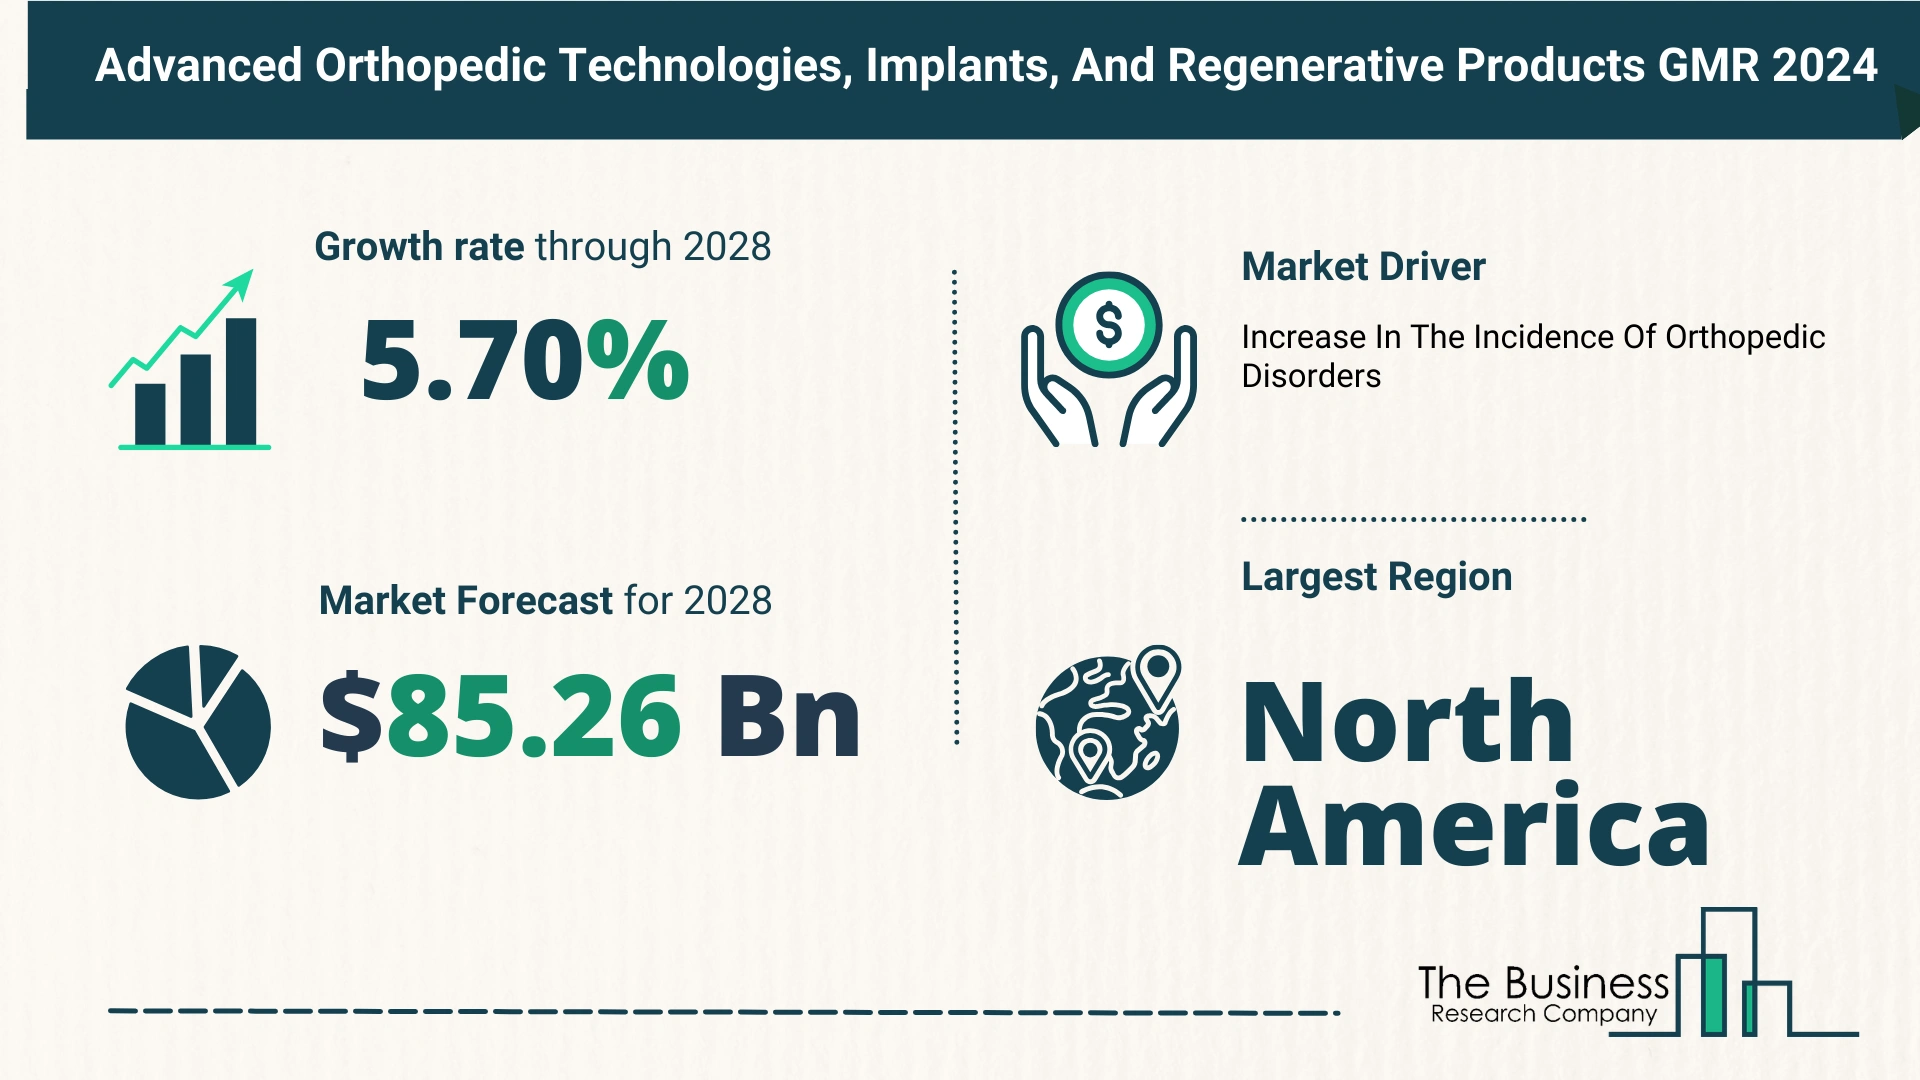 Global Advanced Orthopedic Technologies, Implants, And Regenerative Products Market Size